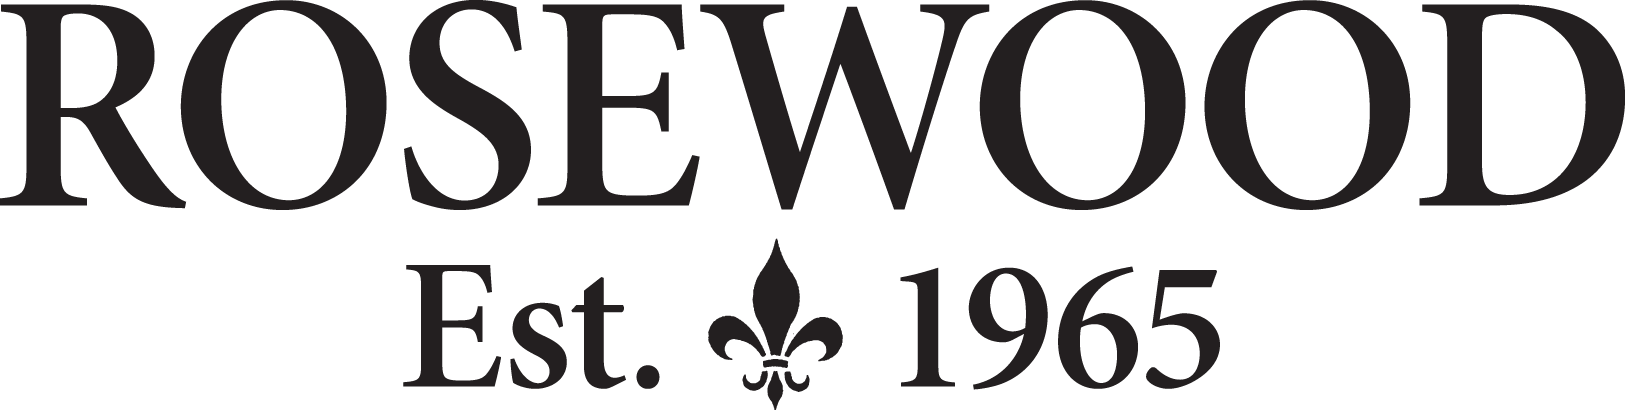 Rosewood Nursing & Rehabilitation logo